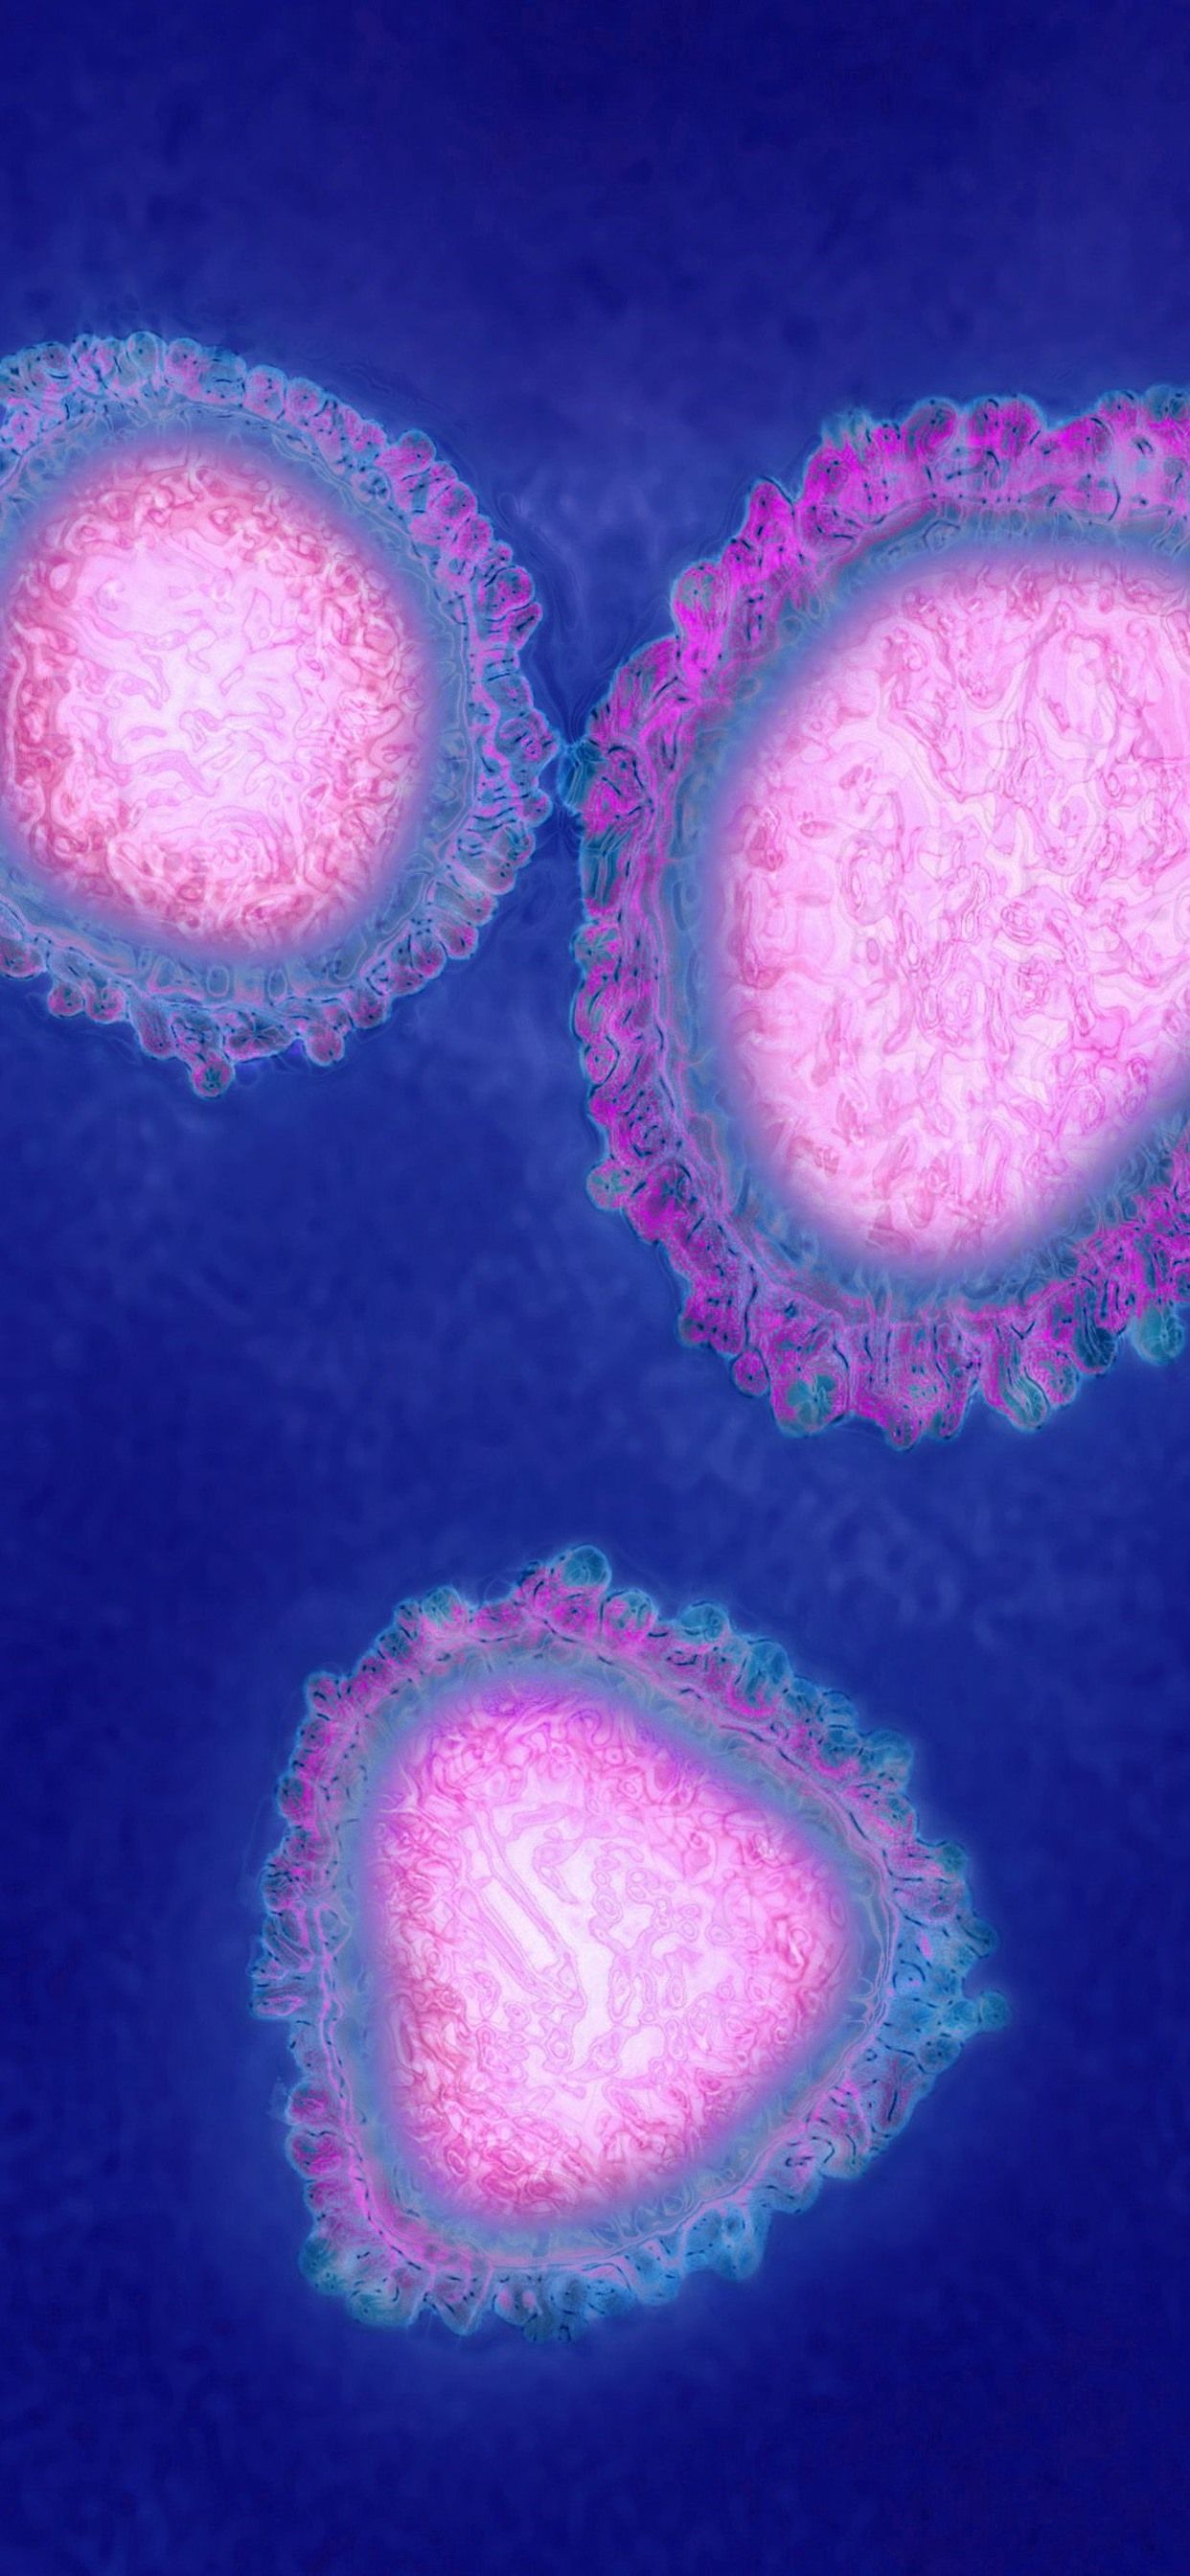 Coronavirus, virus, cells, blue background 1242x2688 iPhone 11 Pro